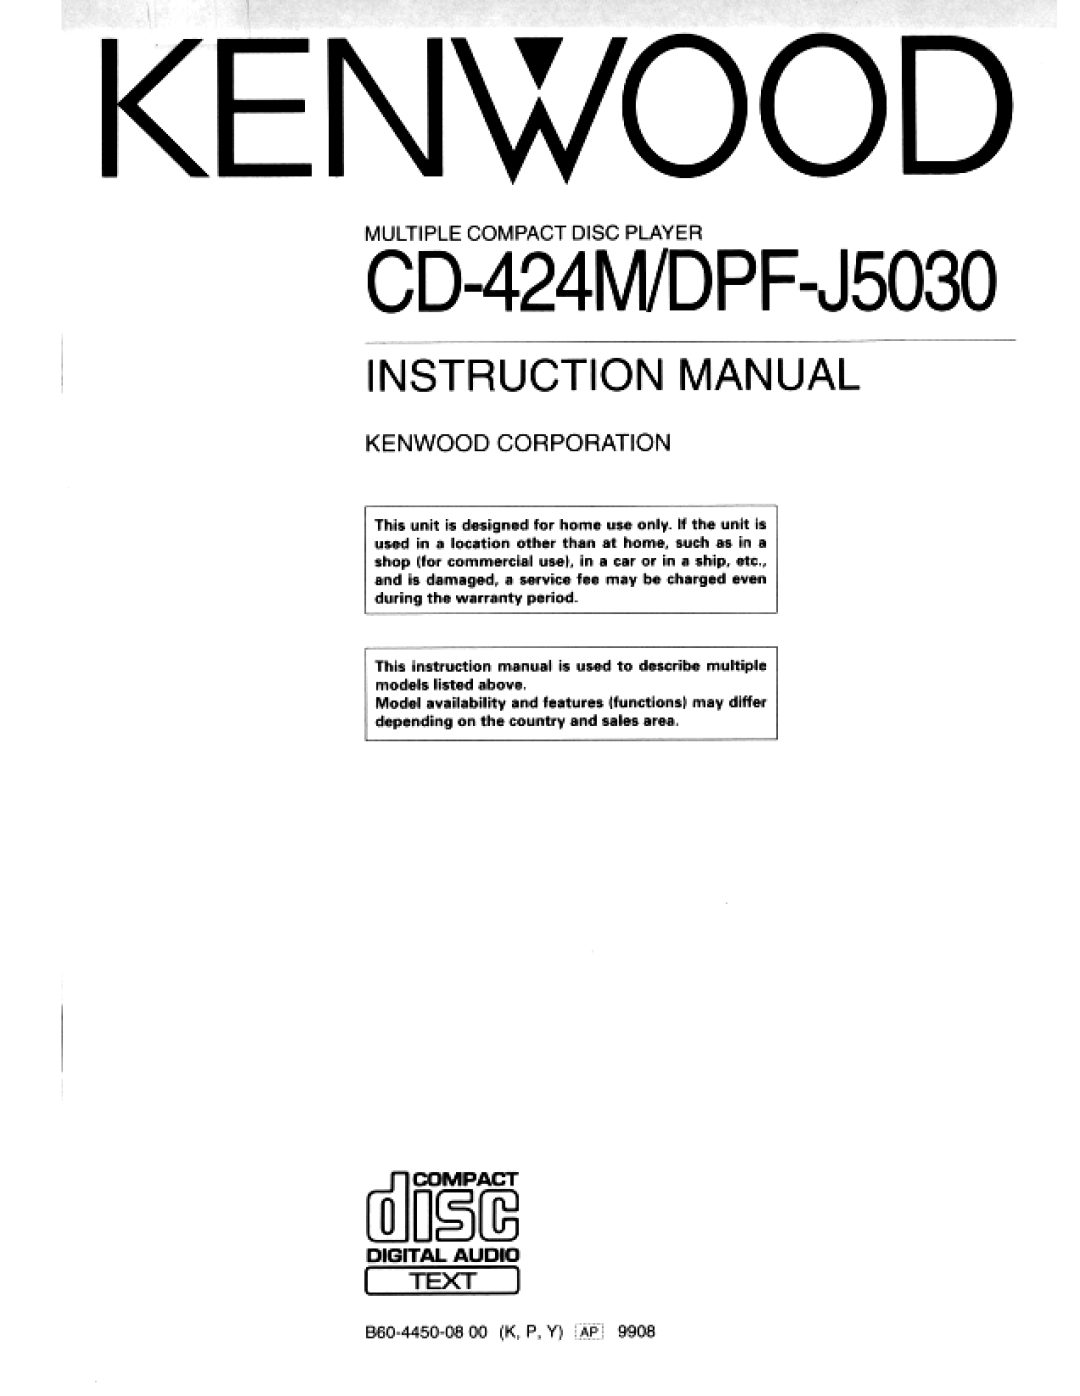 Kenwood CD-424M, DPF-J5030 manual 